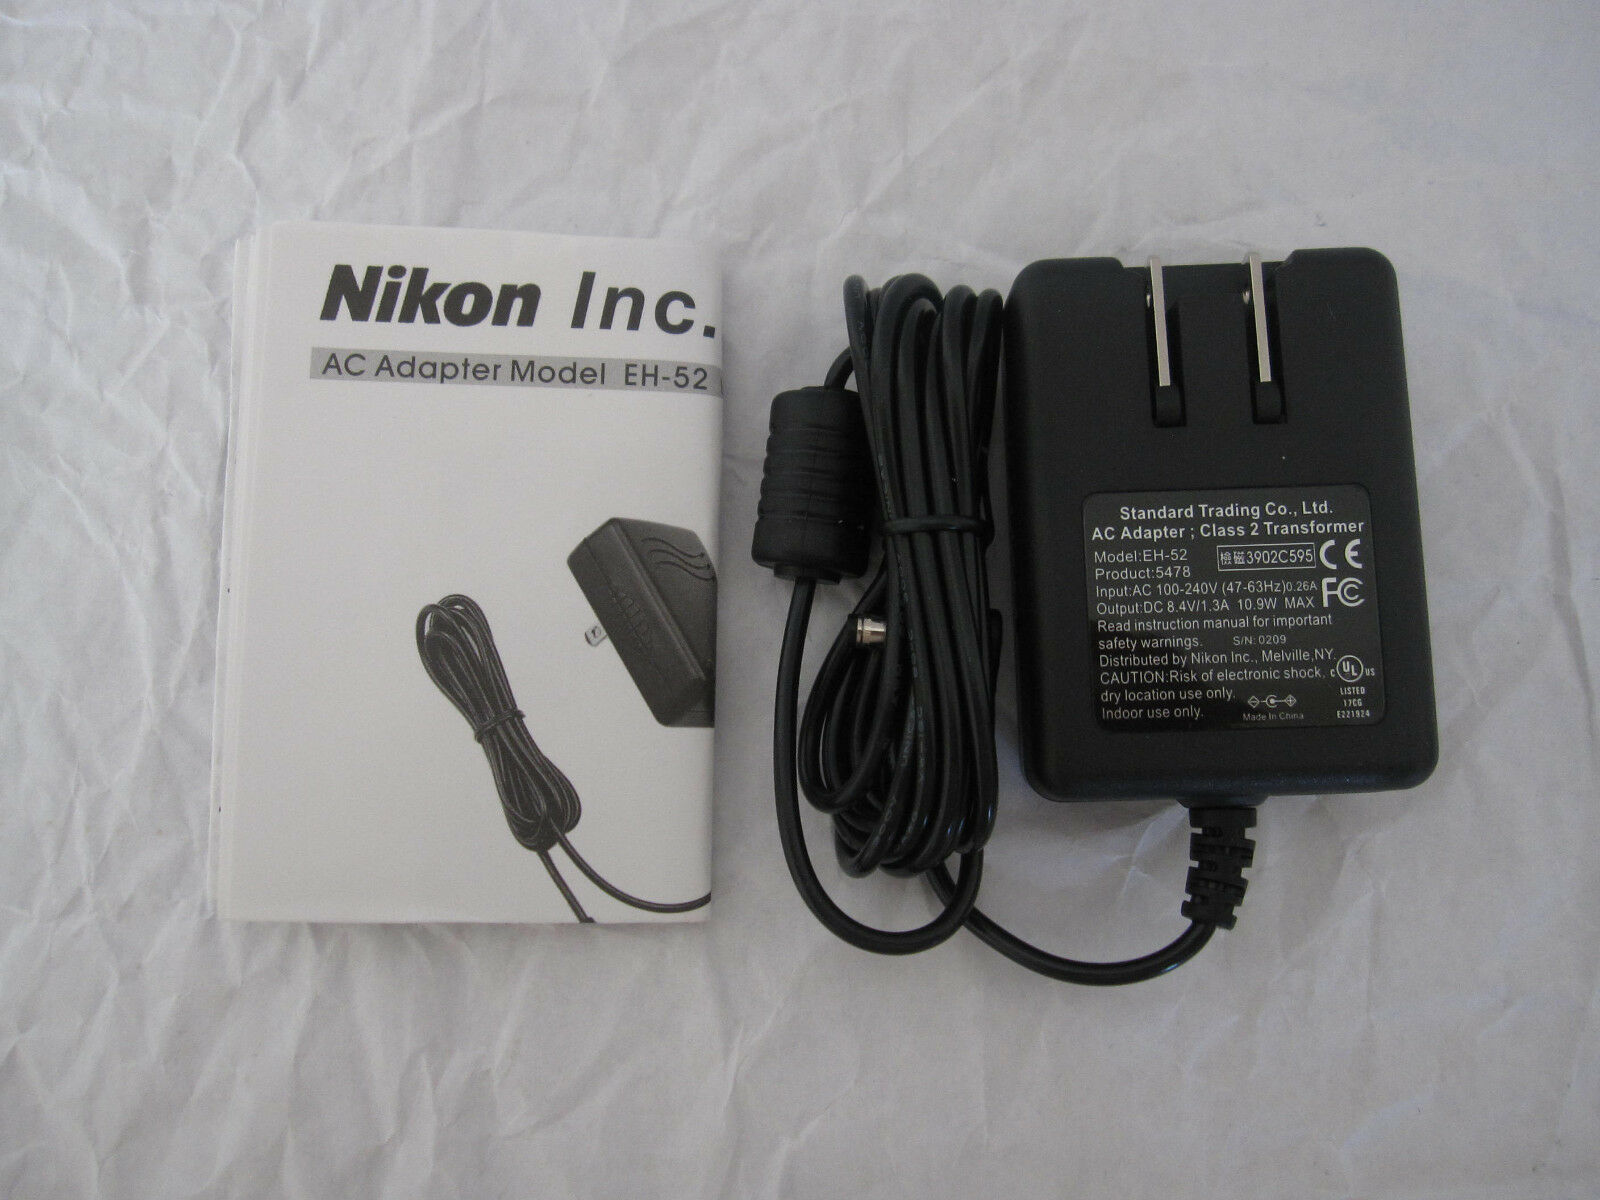 New 8.4V 1.3A Nikon EH-52 Class 2 Transformer Ac Adapter